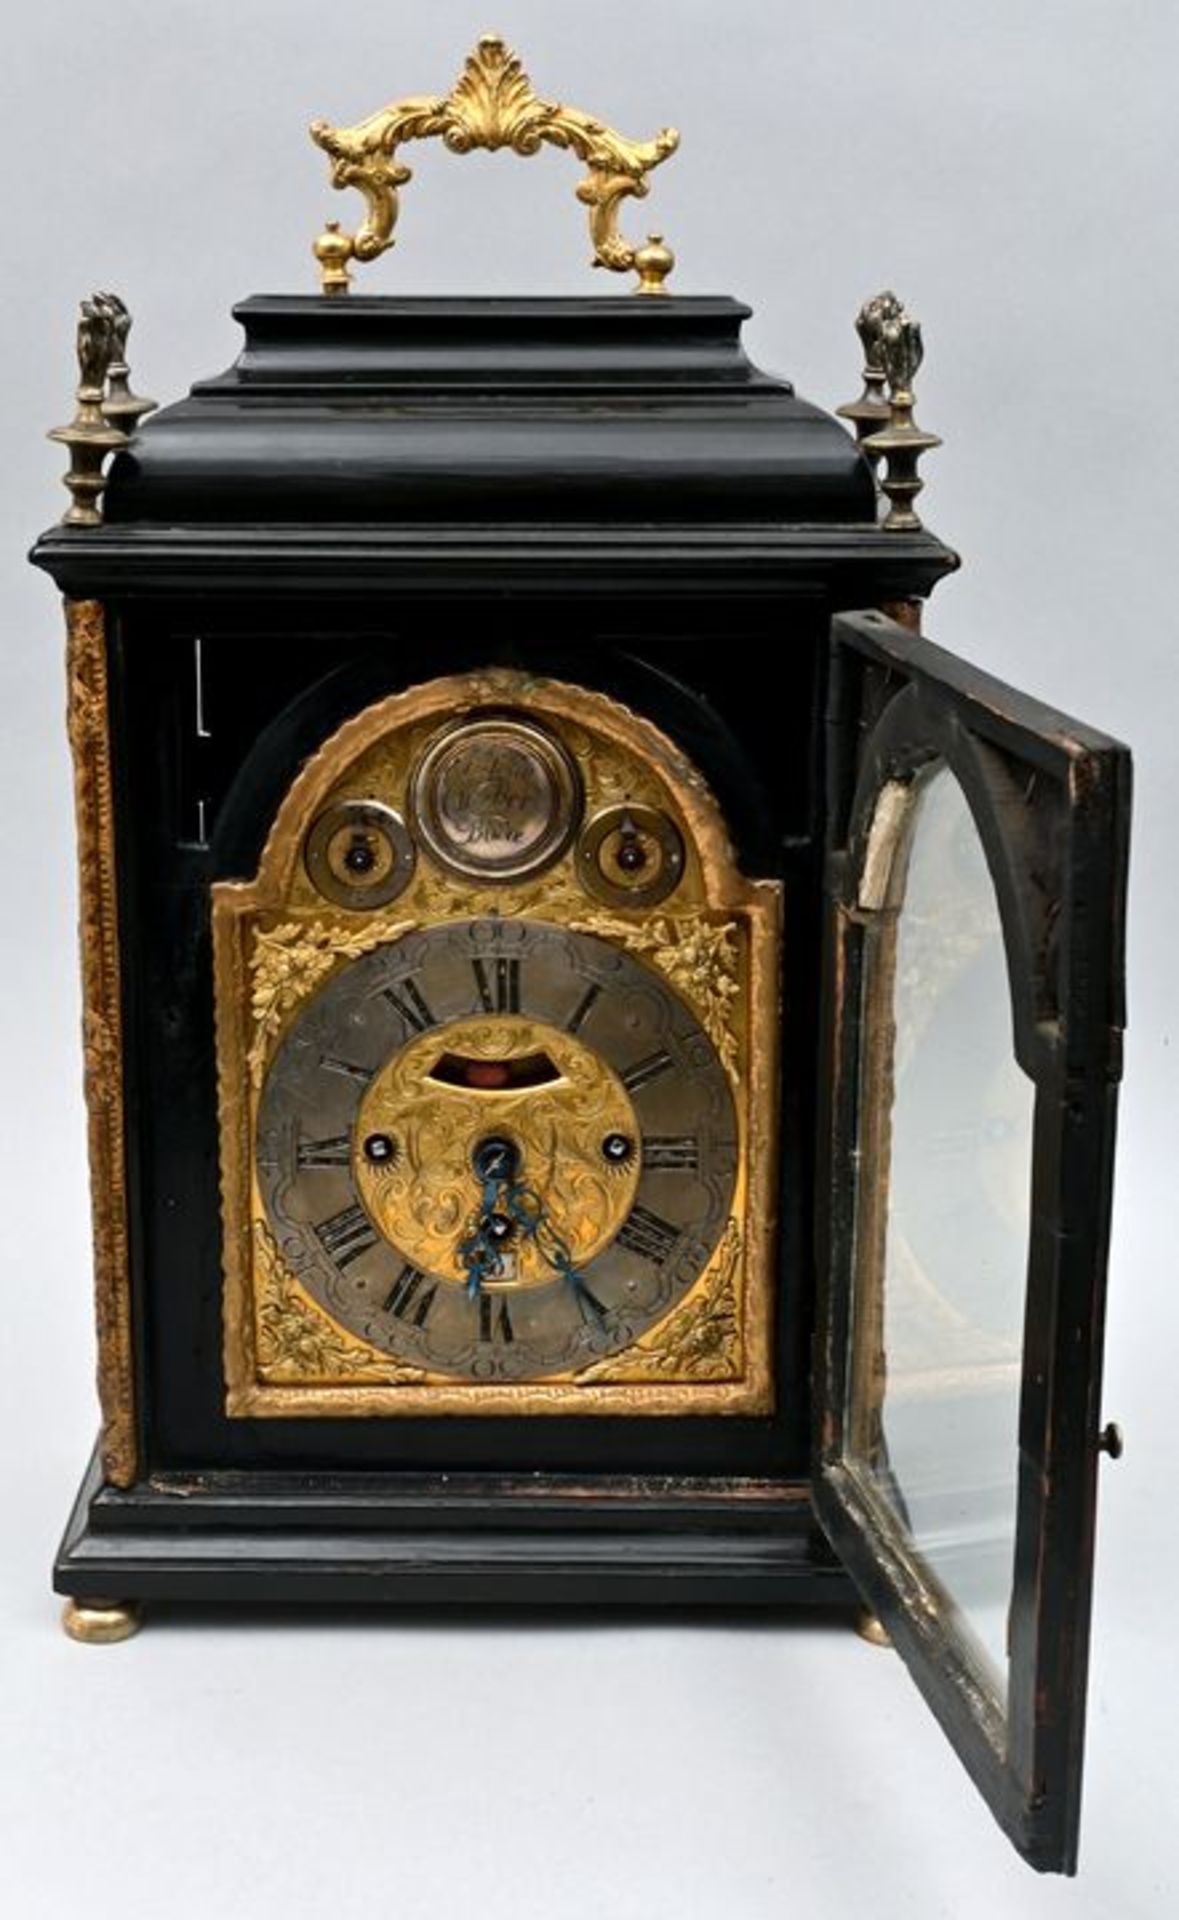 961 Stockuhr, A. Weber Buda/ bracket clock